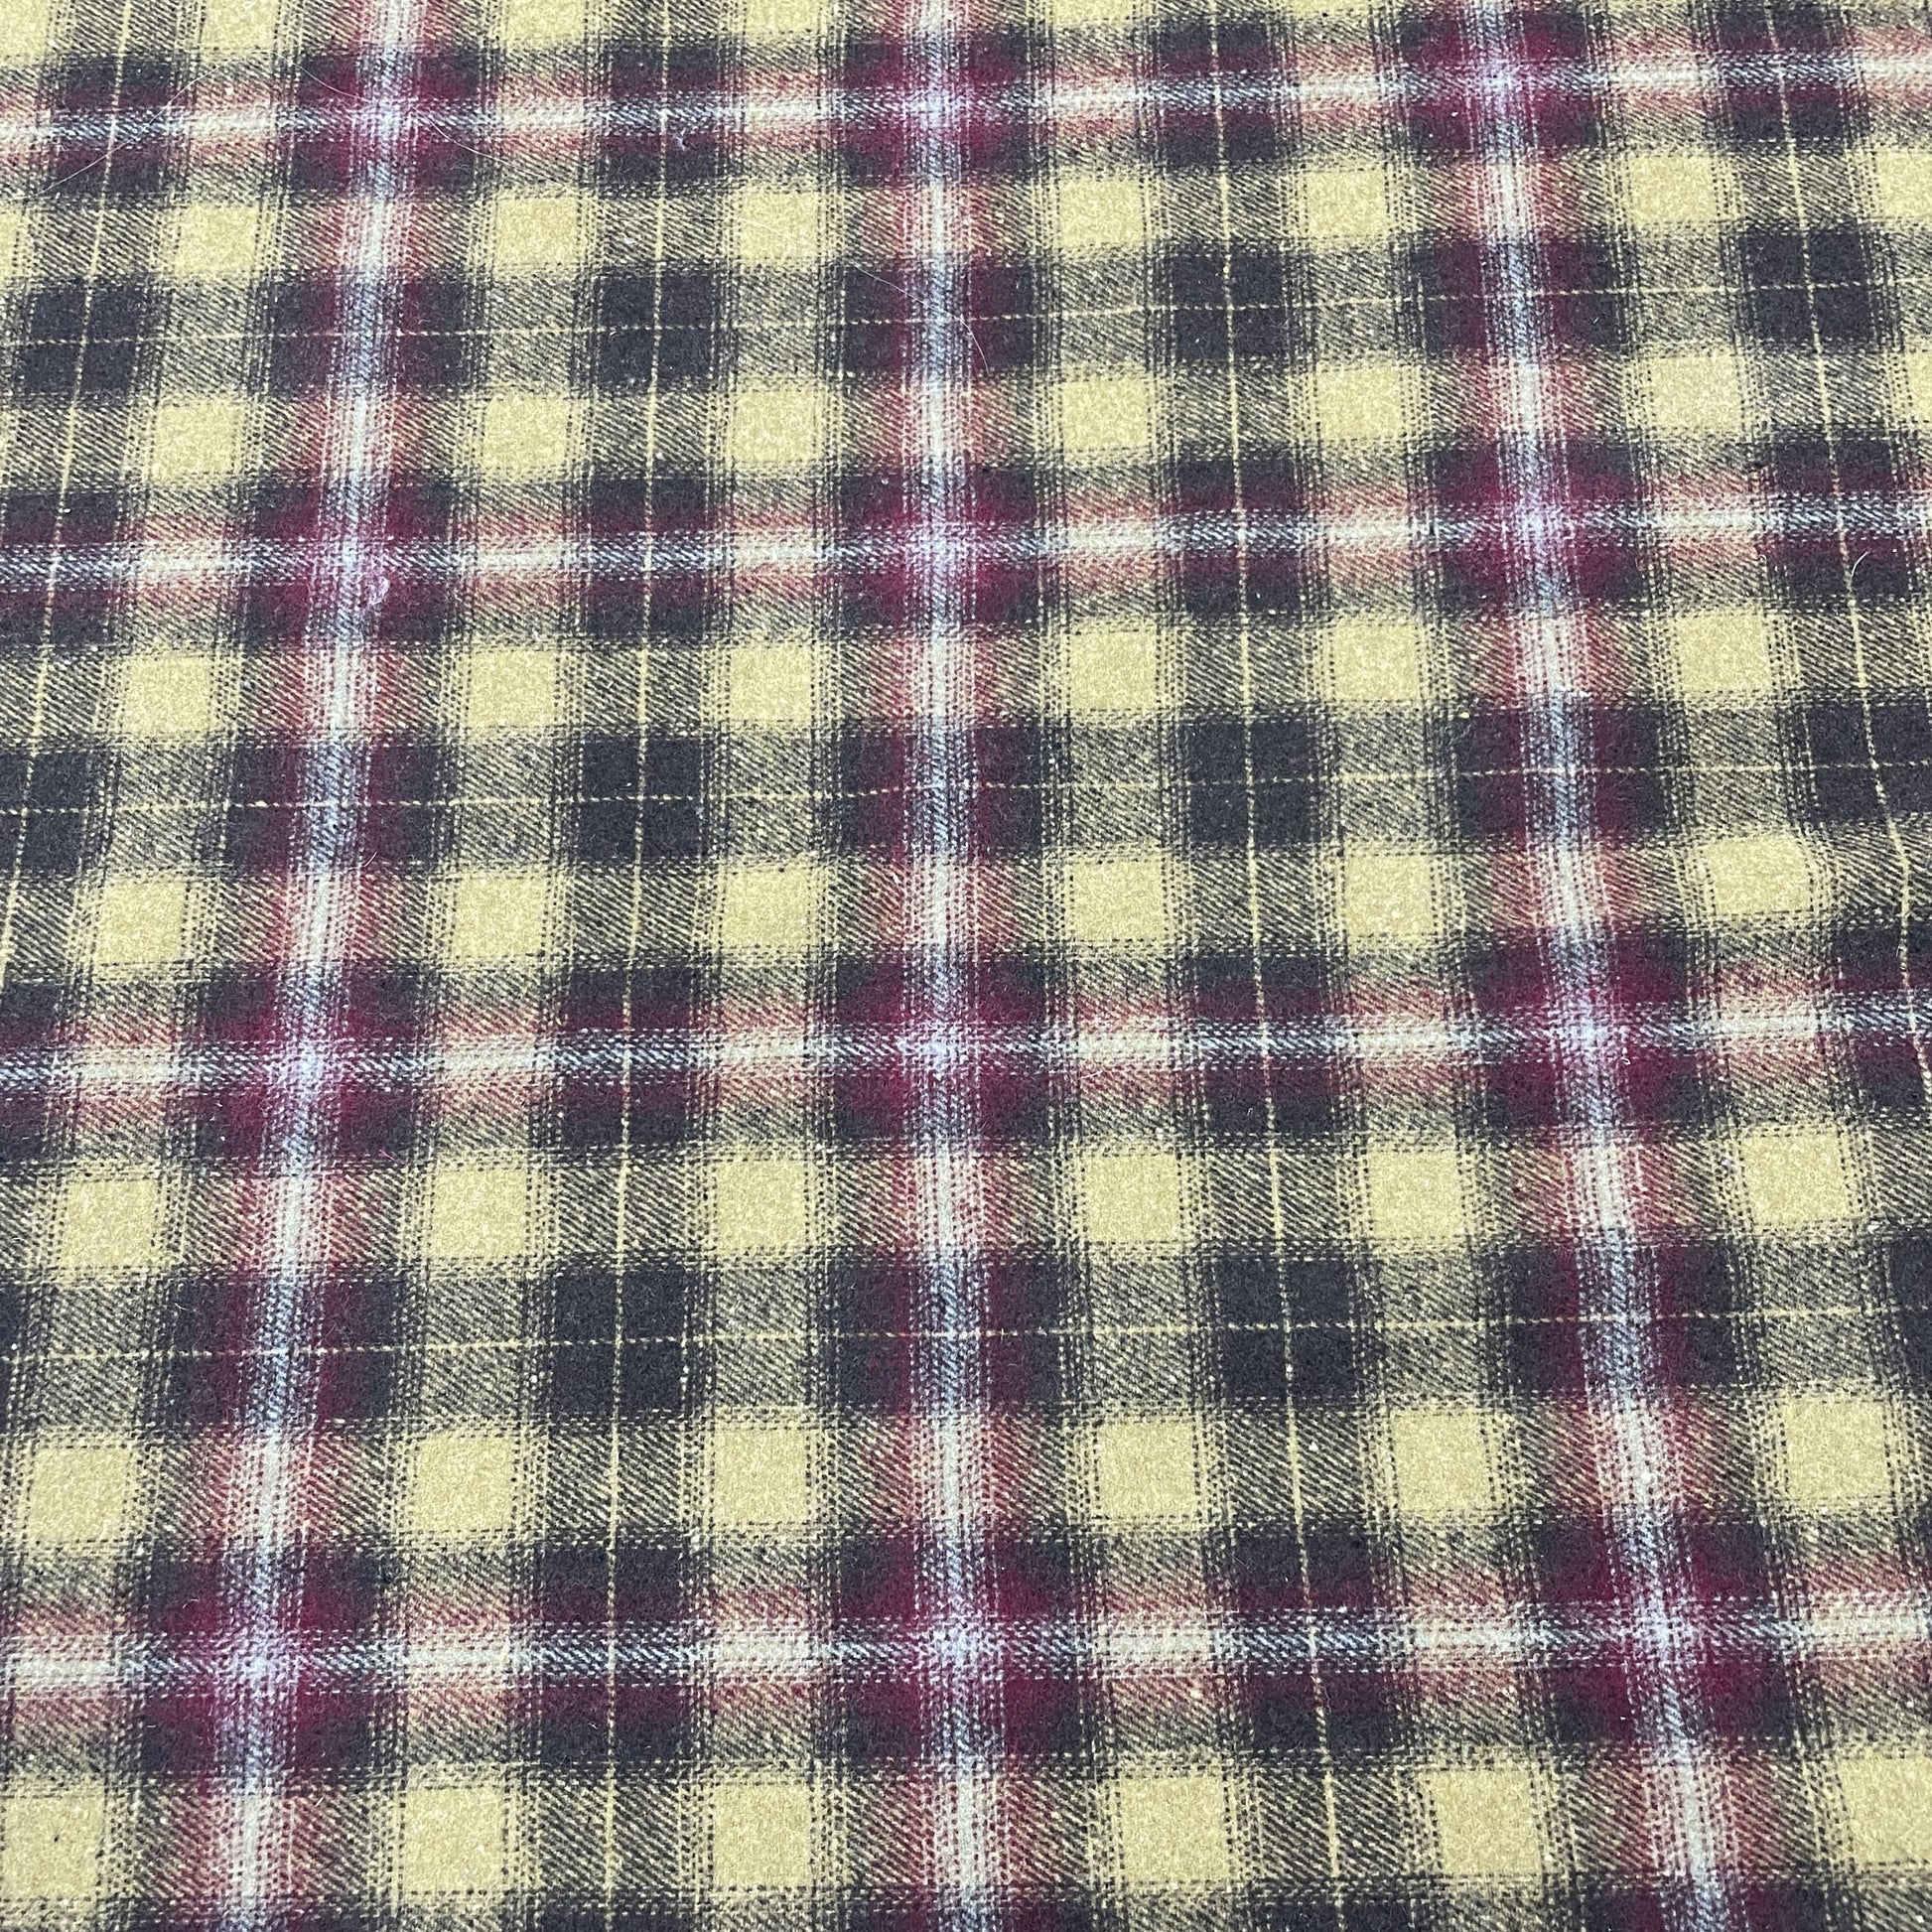 Classic Mustard Yellow Check Print Woolen Tweed Fabric